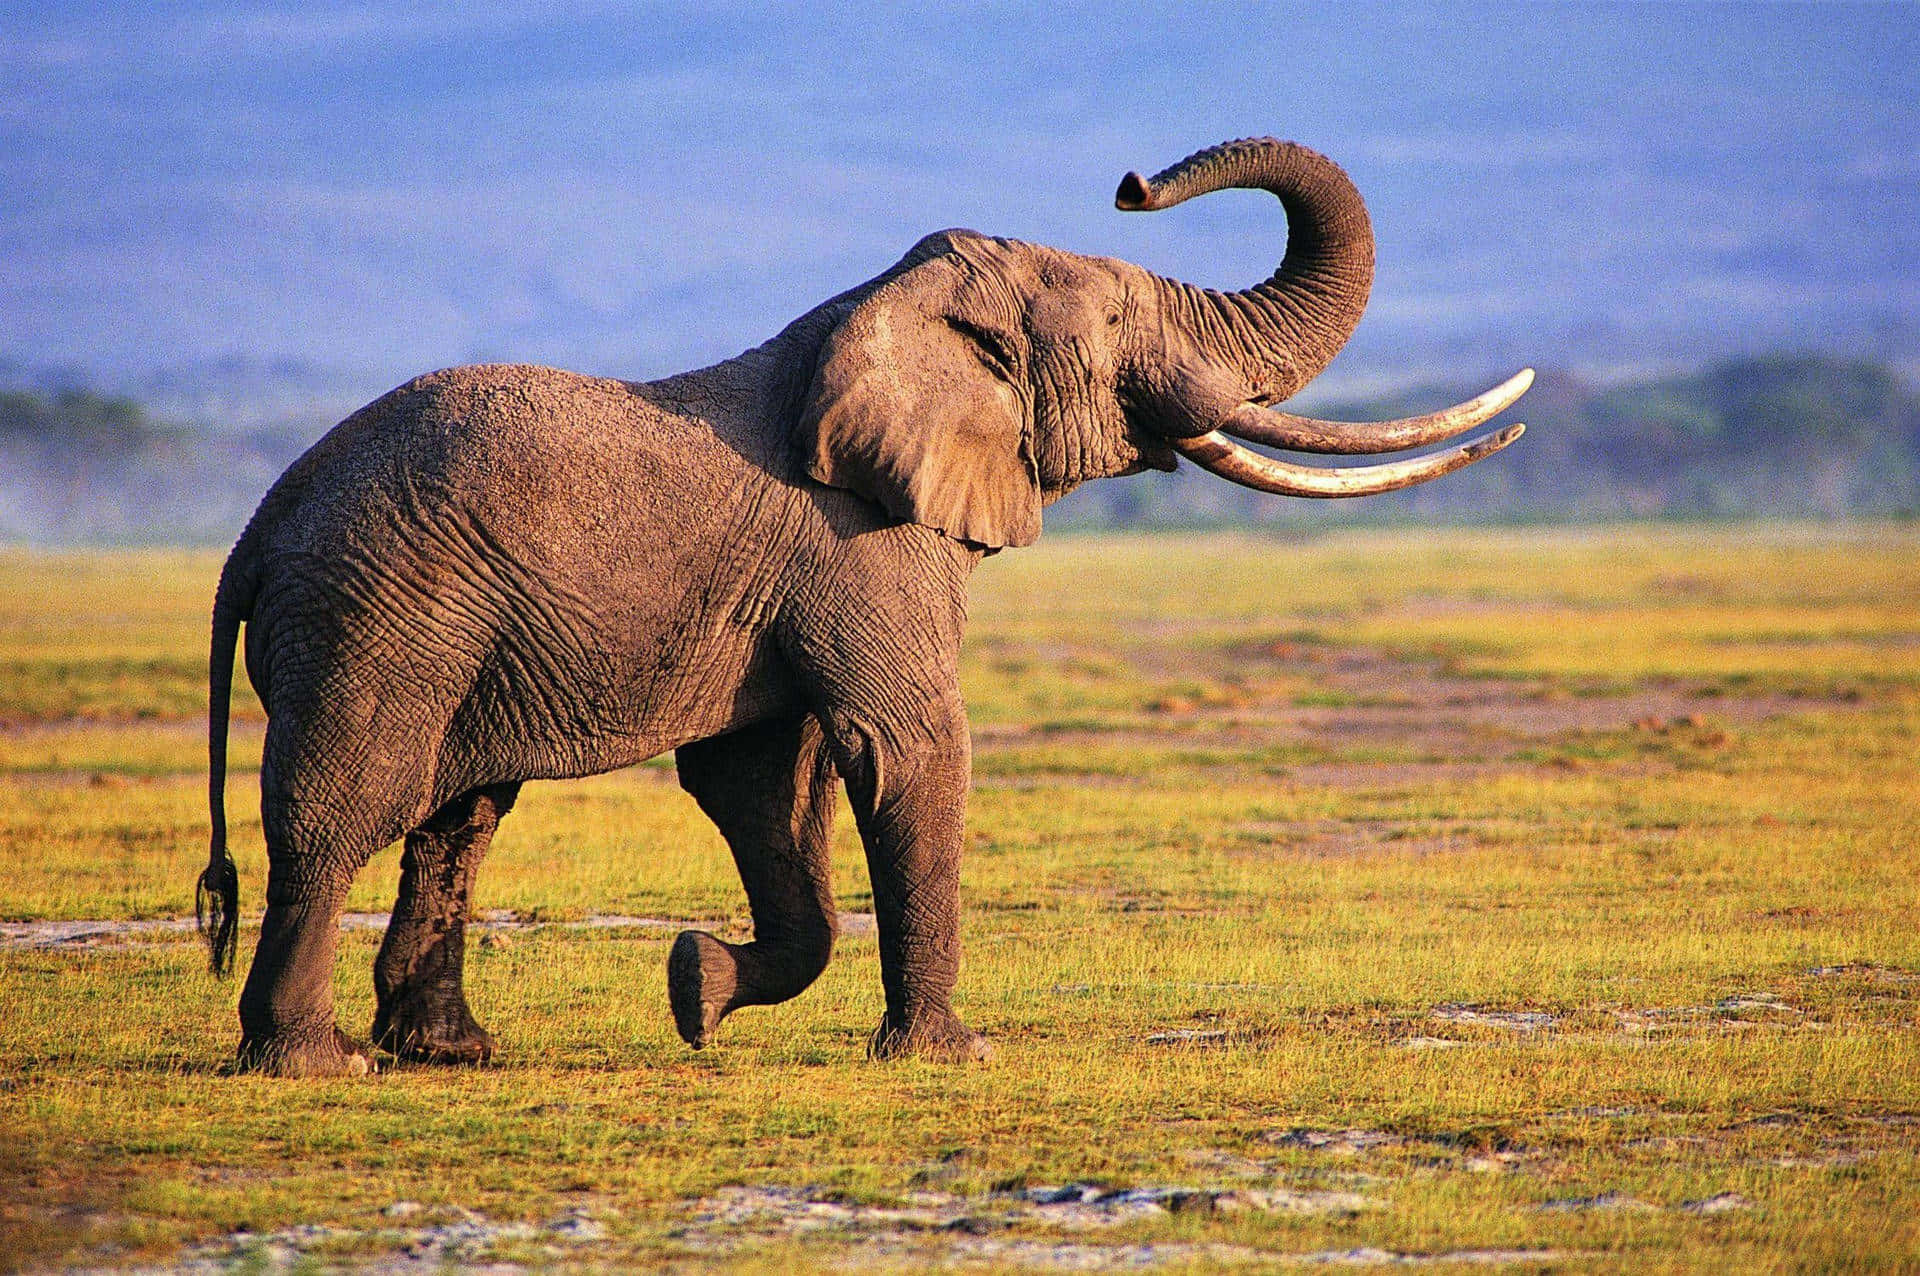 Majestic Elephant Enjoying A Moment in its Natural Habitat